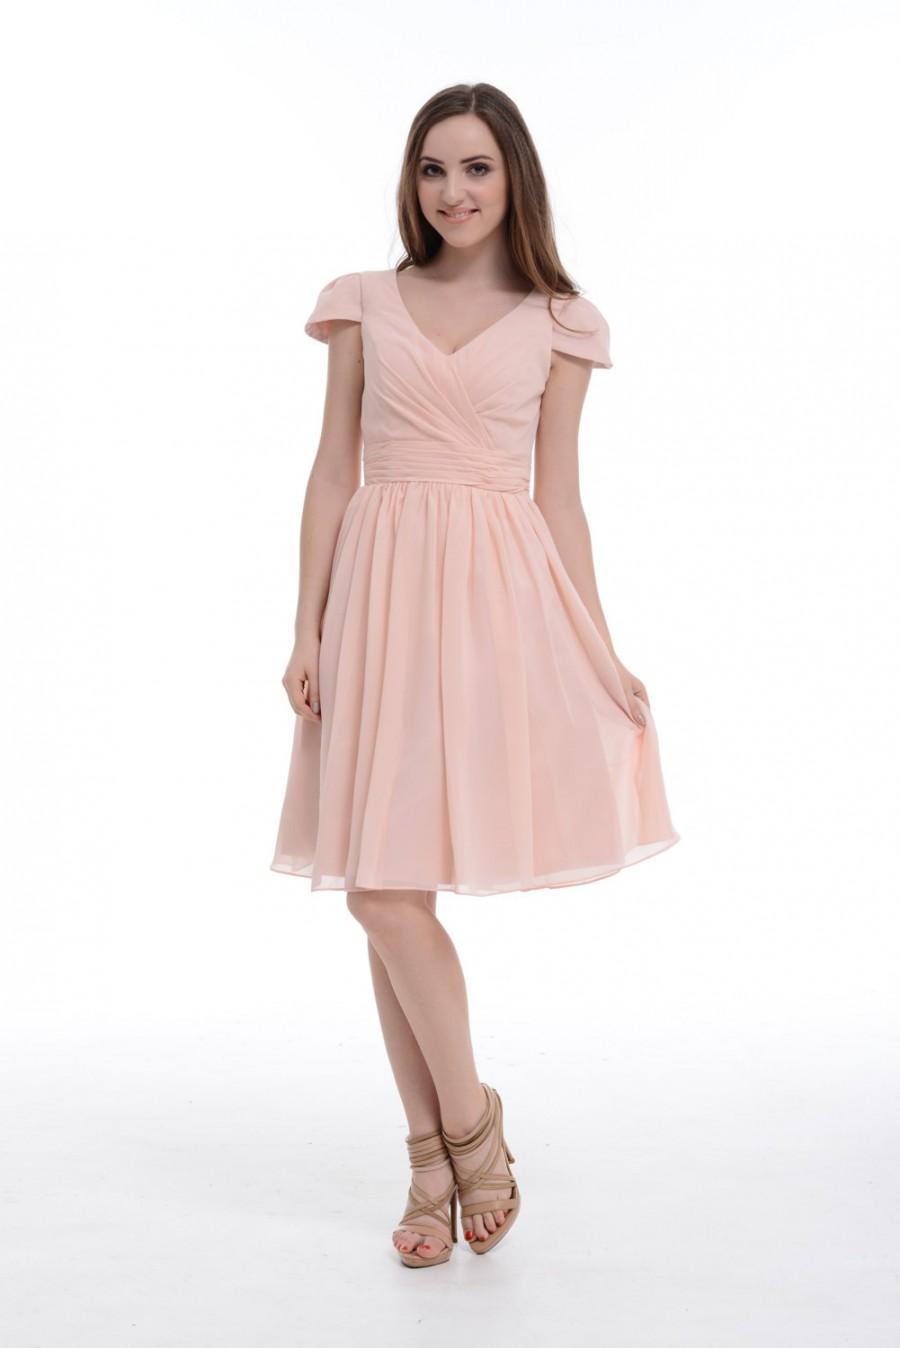 زفاف - Pearl Pink Chiffon Bridesmaid Dress, Bridesmaid Dress With Cap Sleeves